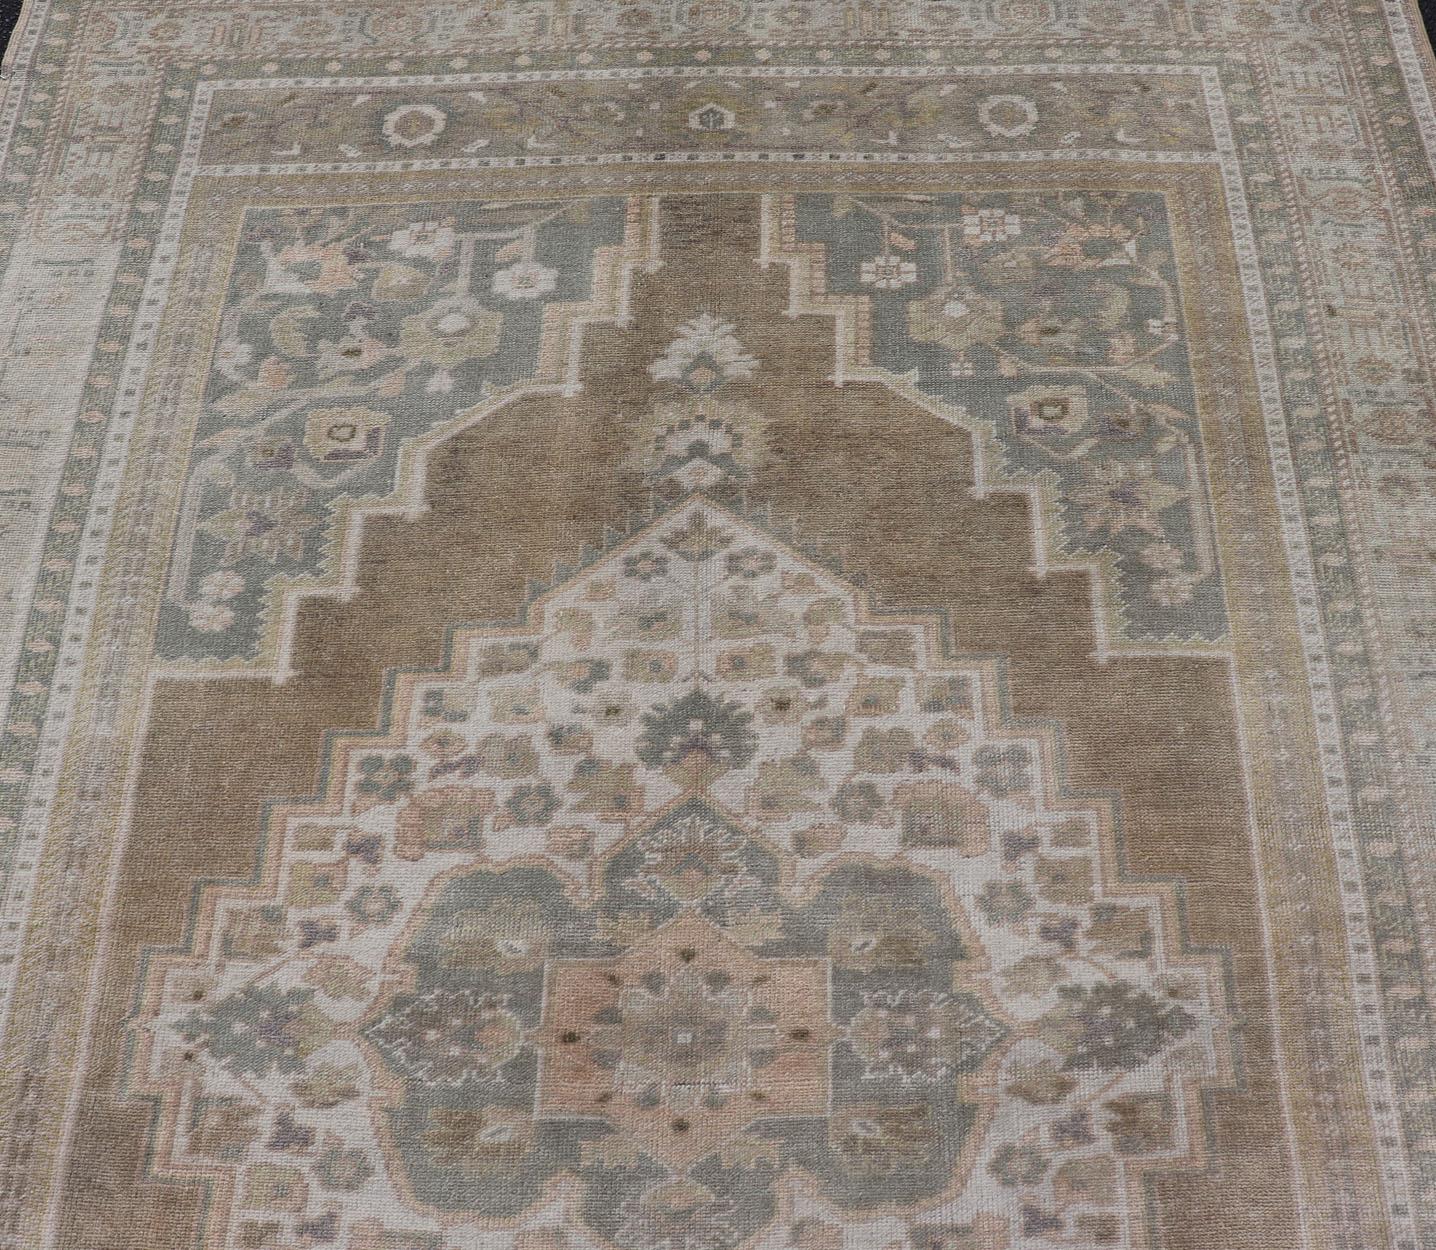 Vintage Oushak rug from Turkey with Medallion Design. Keivan Woven Arts /  rug/EN-178437, Keivan Woven Arts / country of origin / type: Turkey / Oushak, circa 1940.
Measures: 6'4 x 9'5 
    
The design of this beautiful vintage Oushak rug from